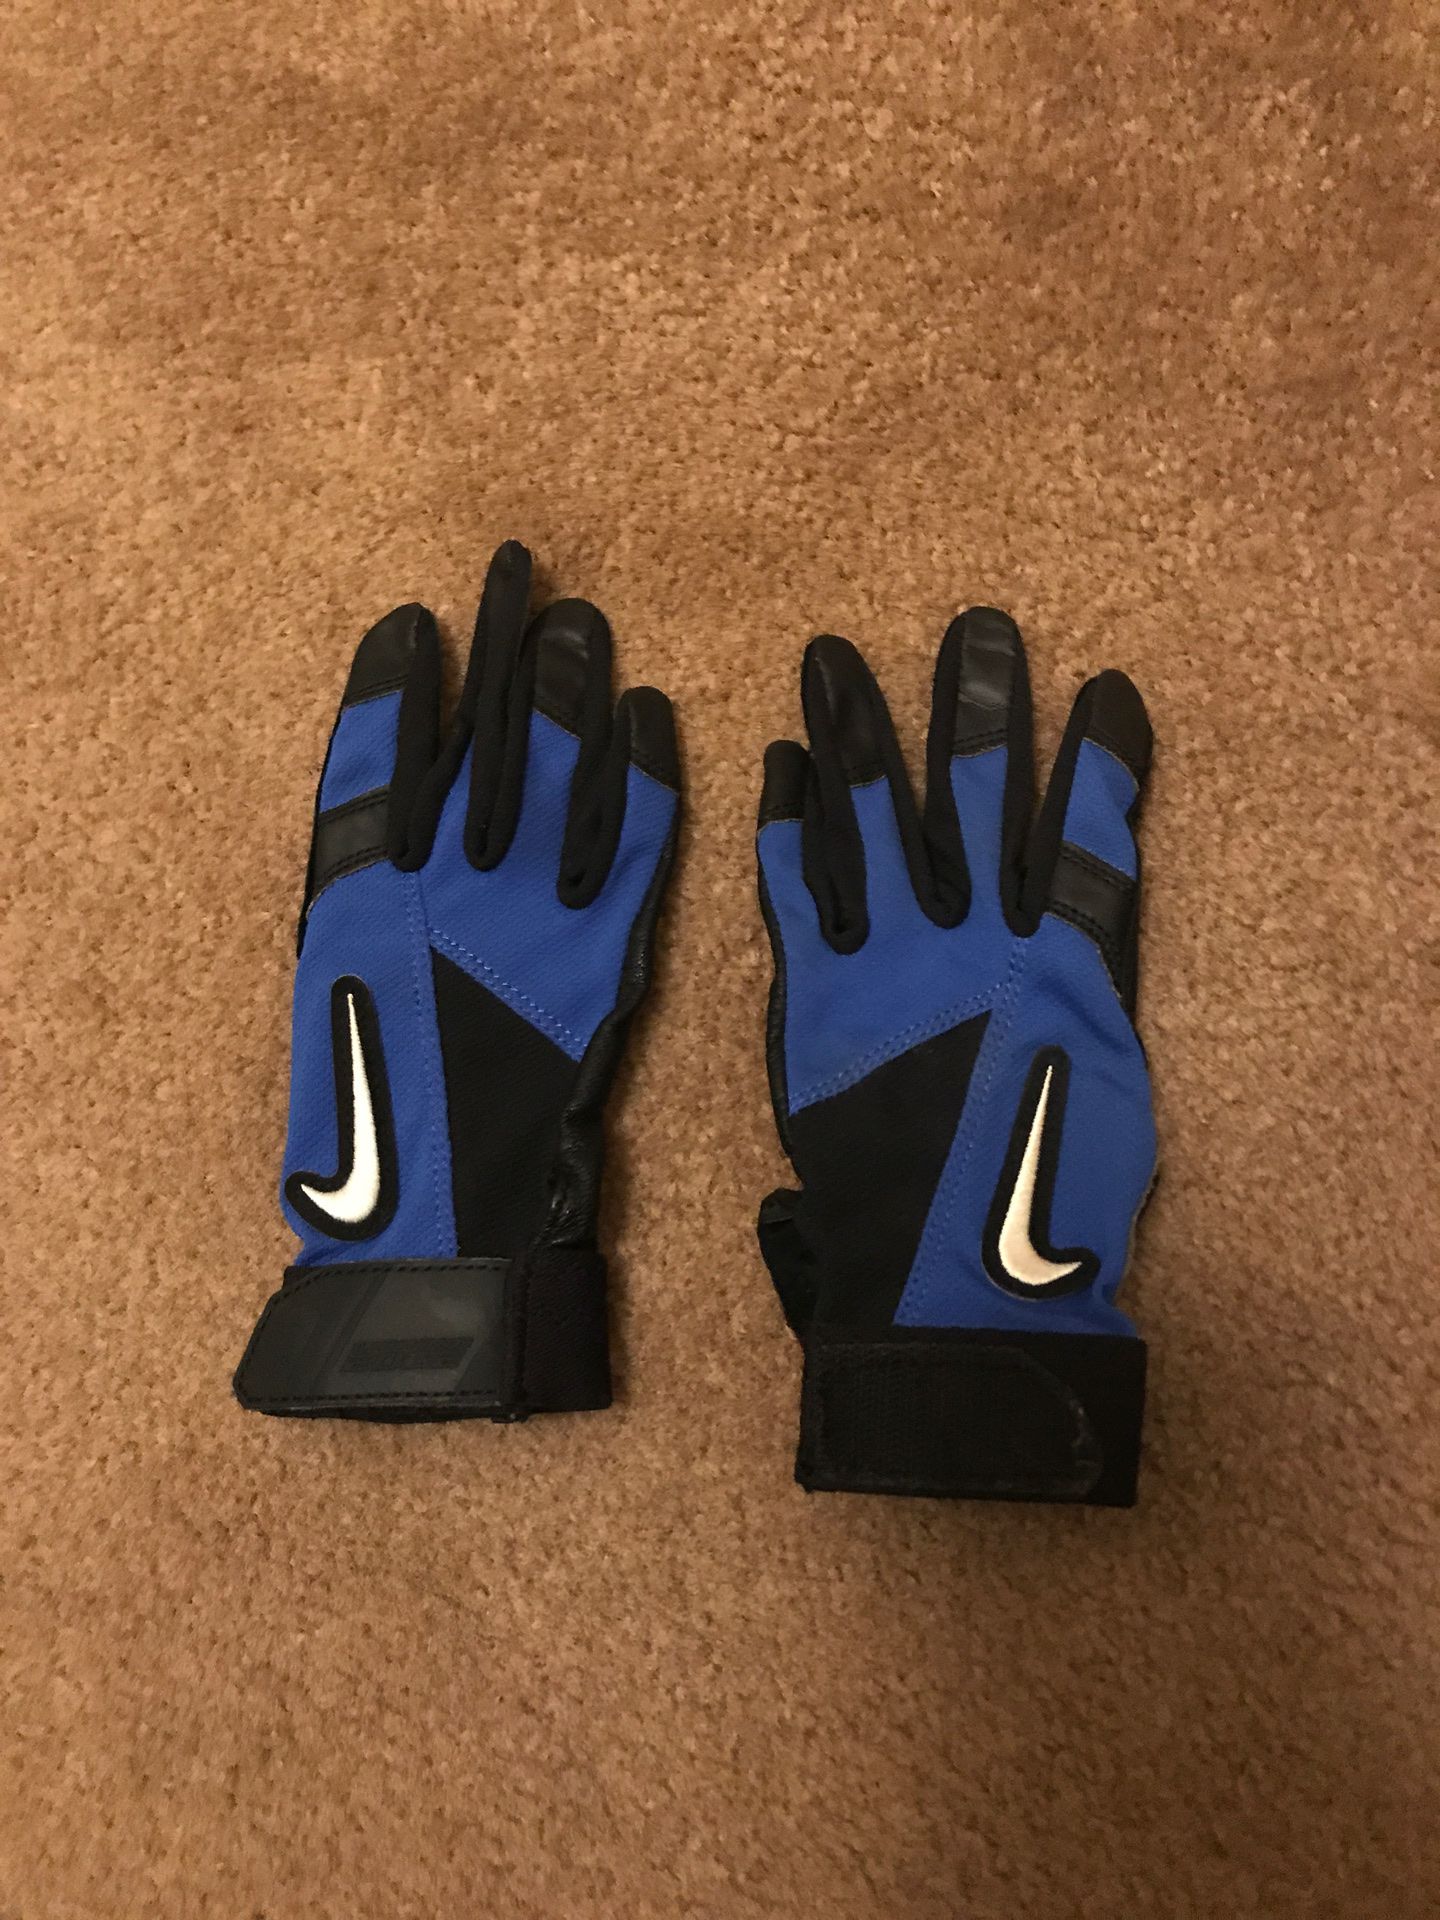 Nike Youth Baseball/Softball Gloves